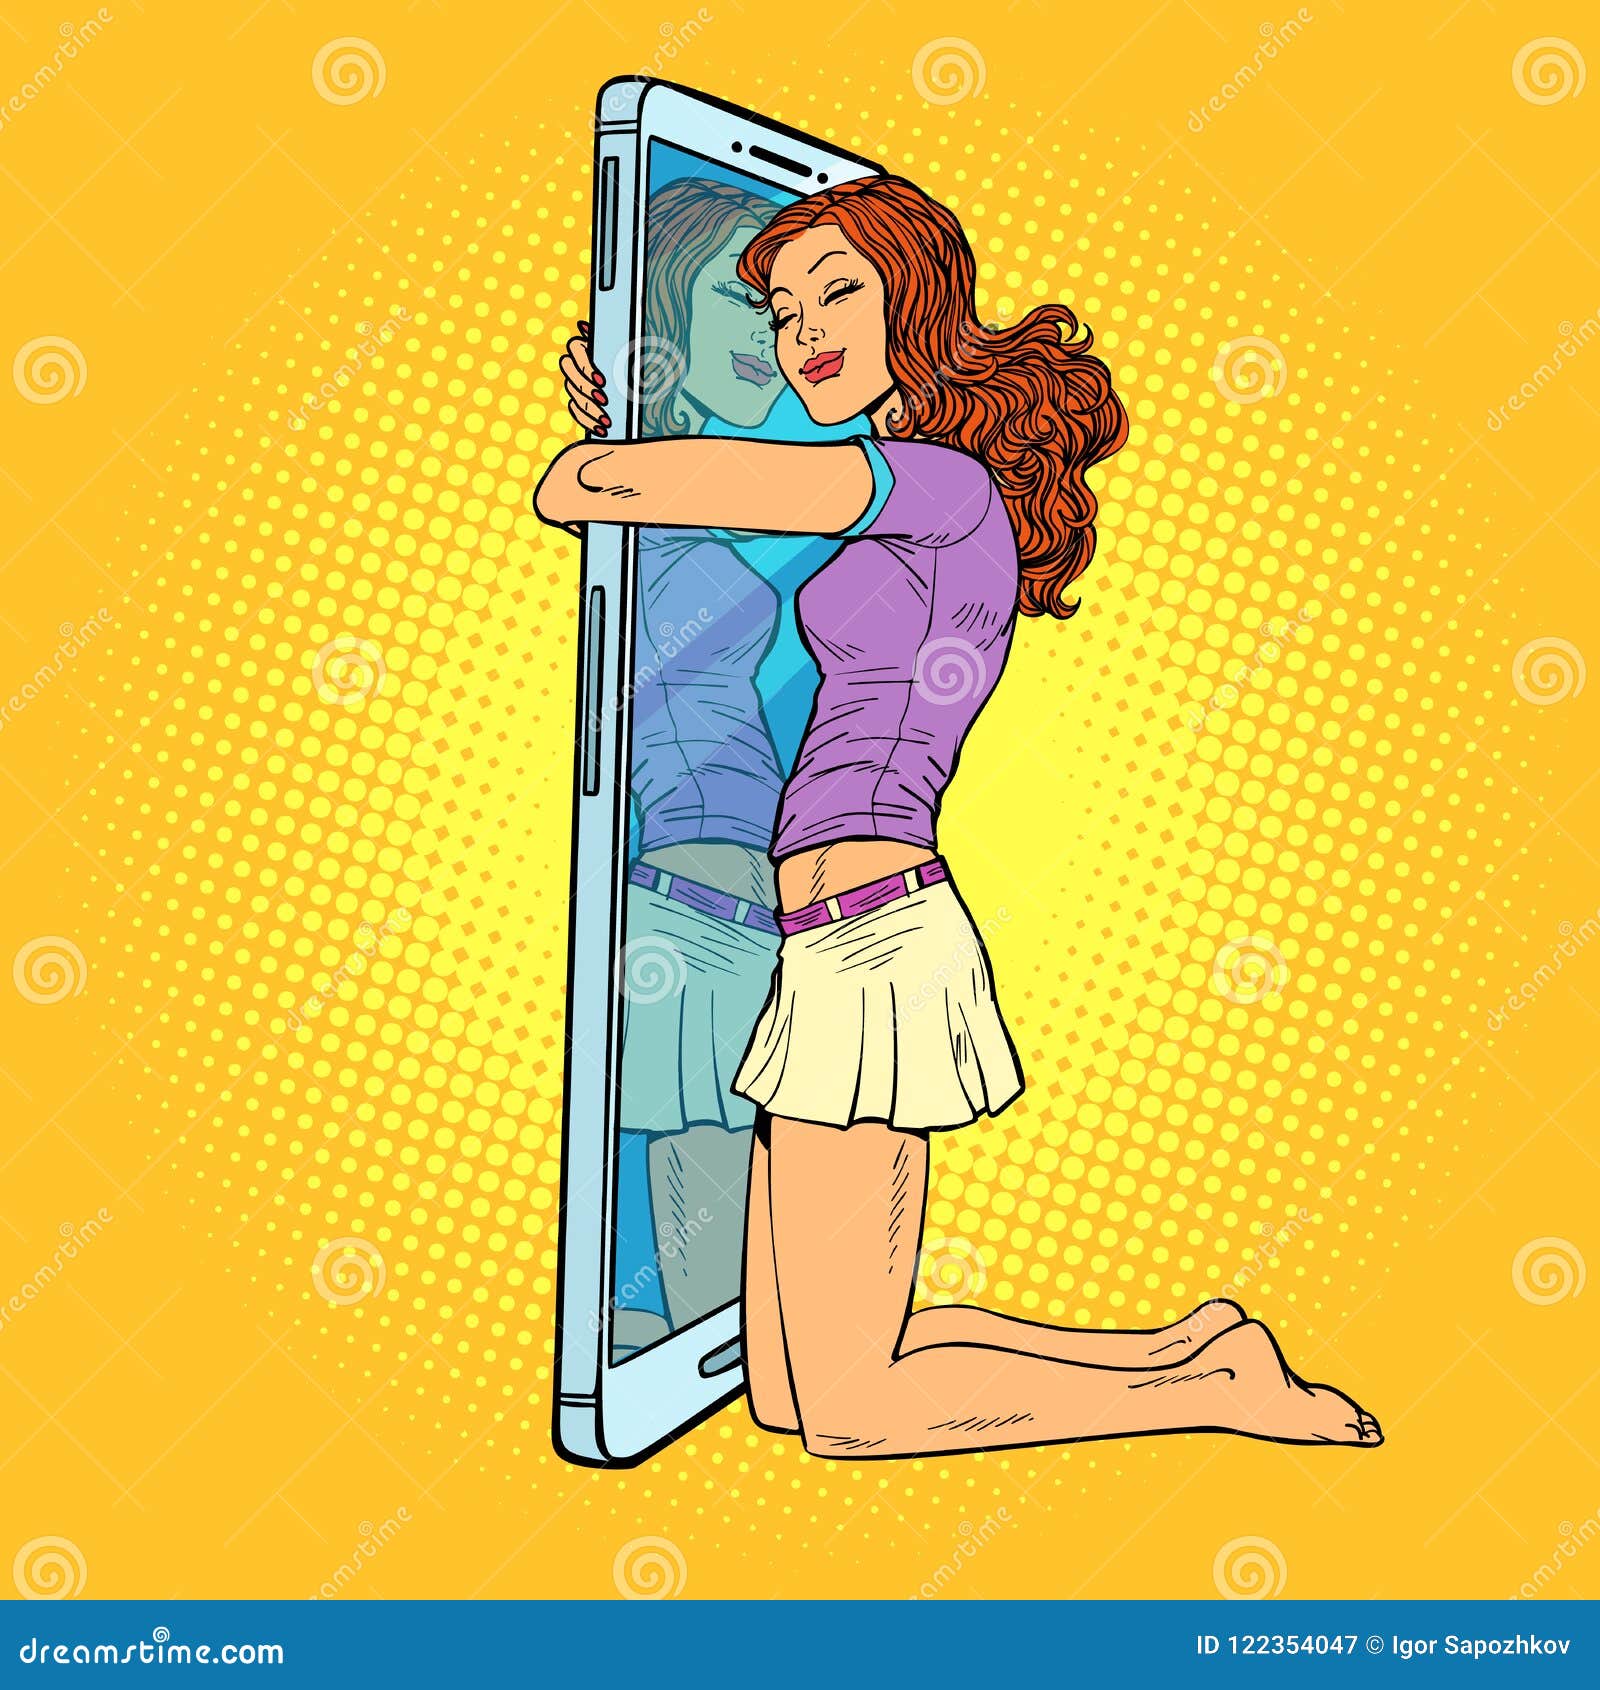 young woman hugs a smartphone. enjoys his gadget